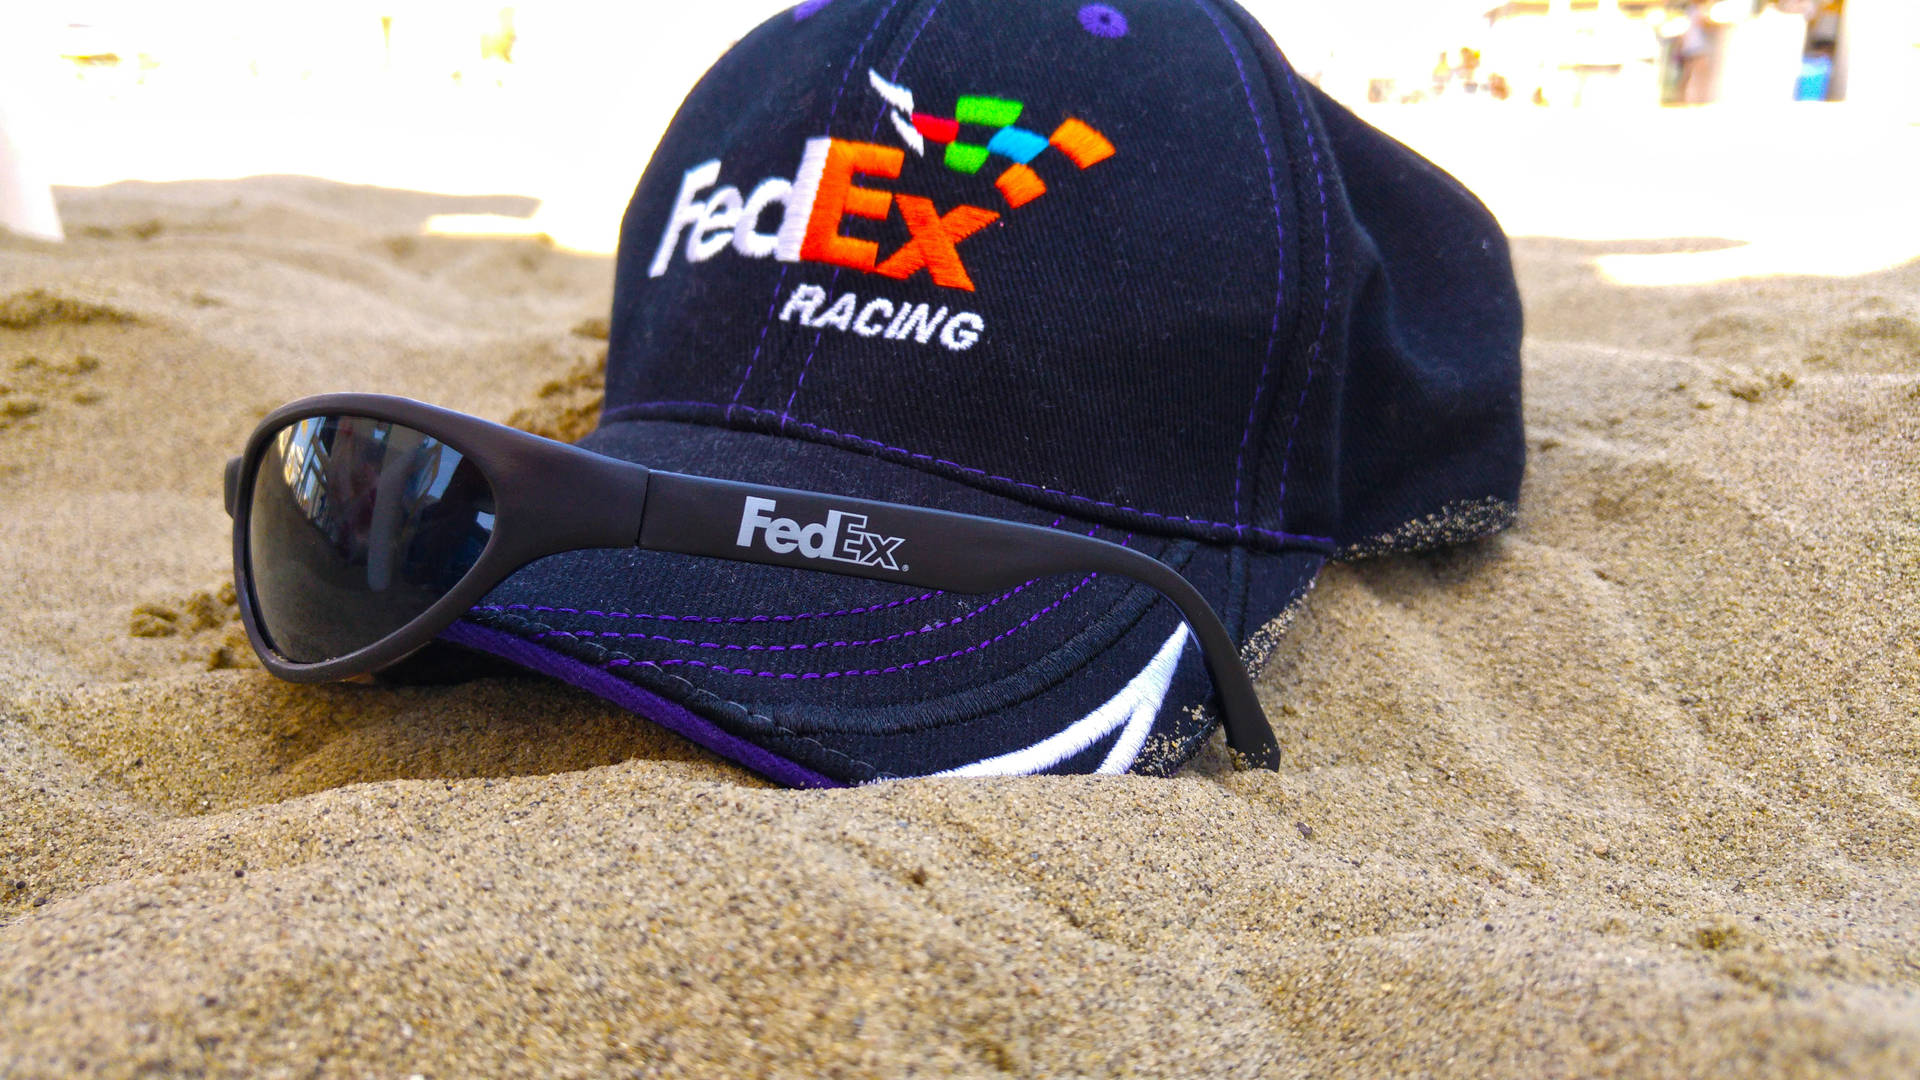 Fedex Racing Merchandise Background